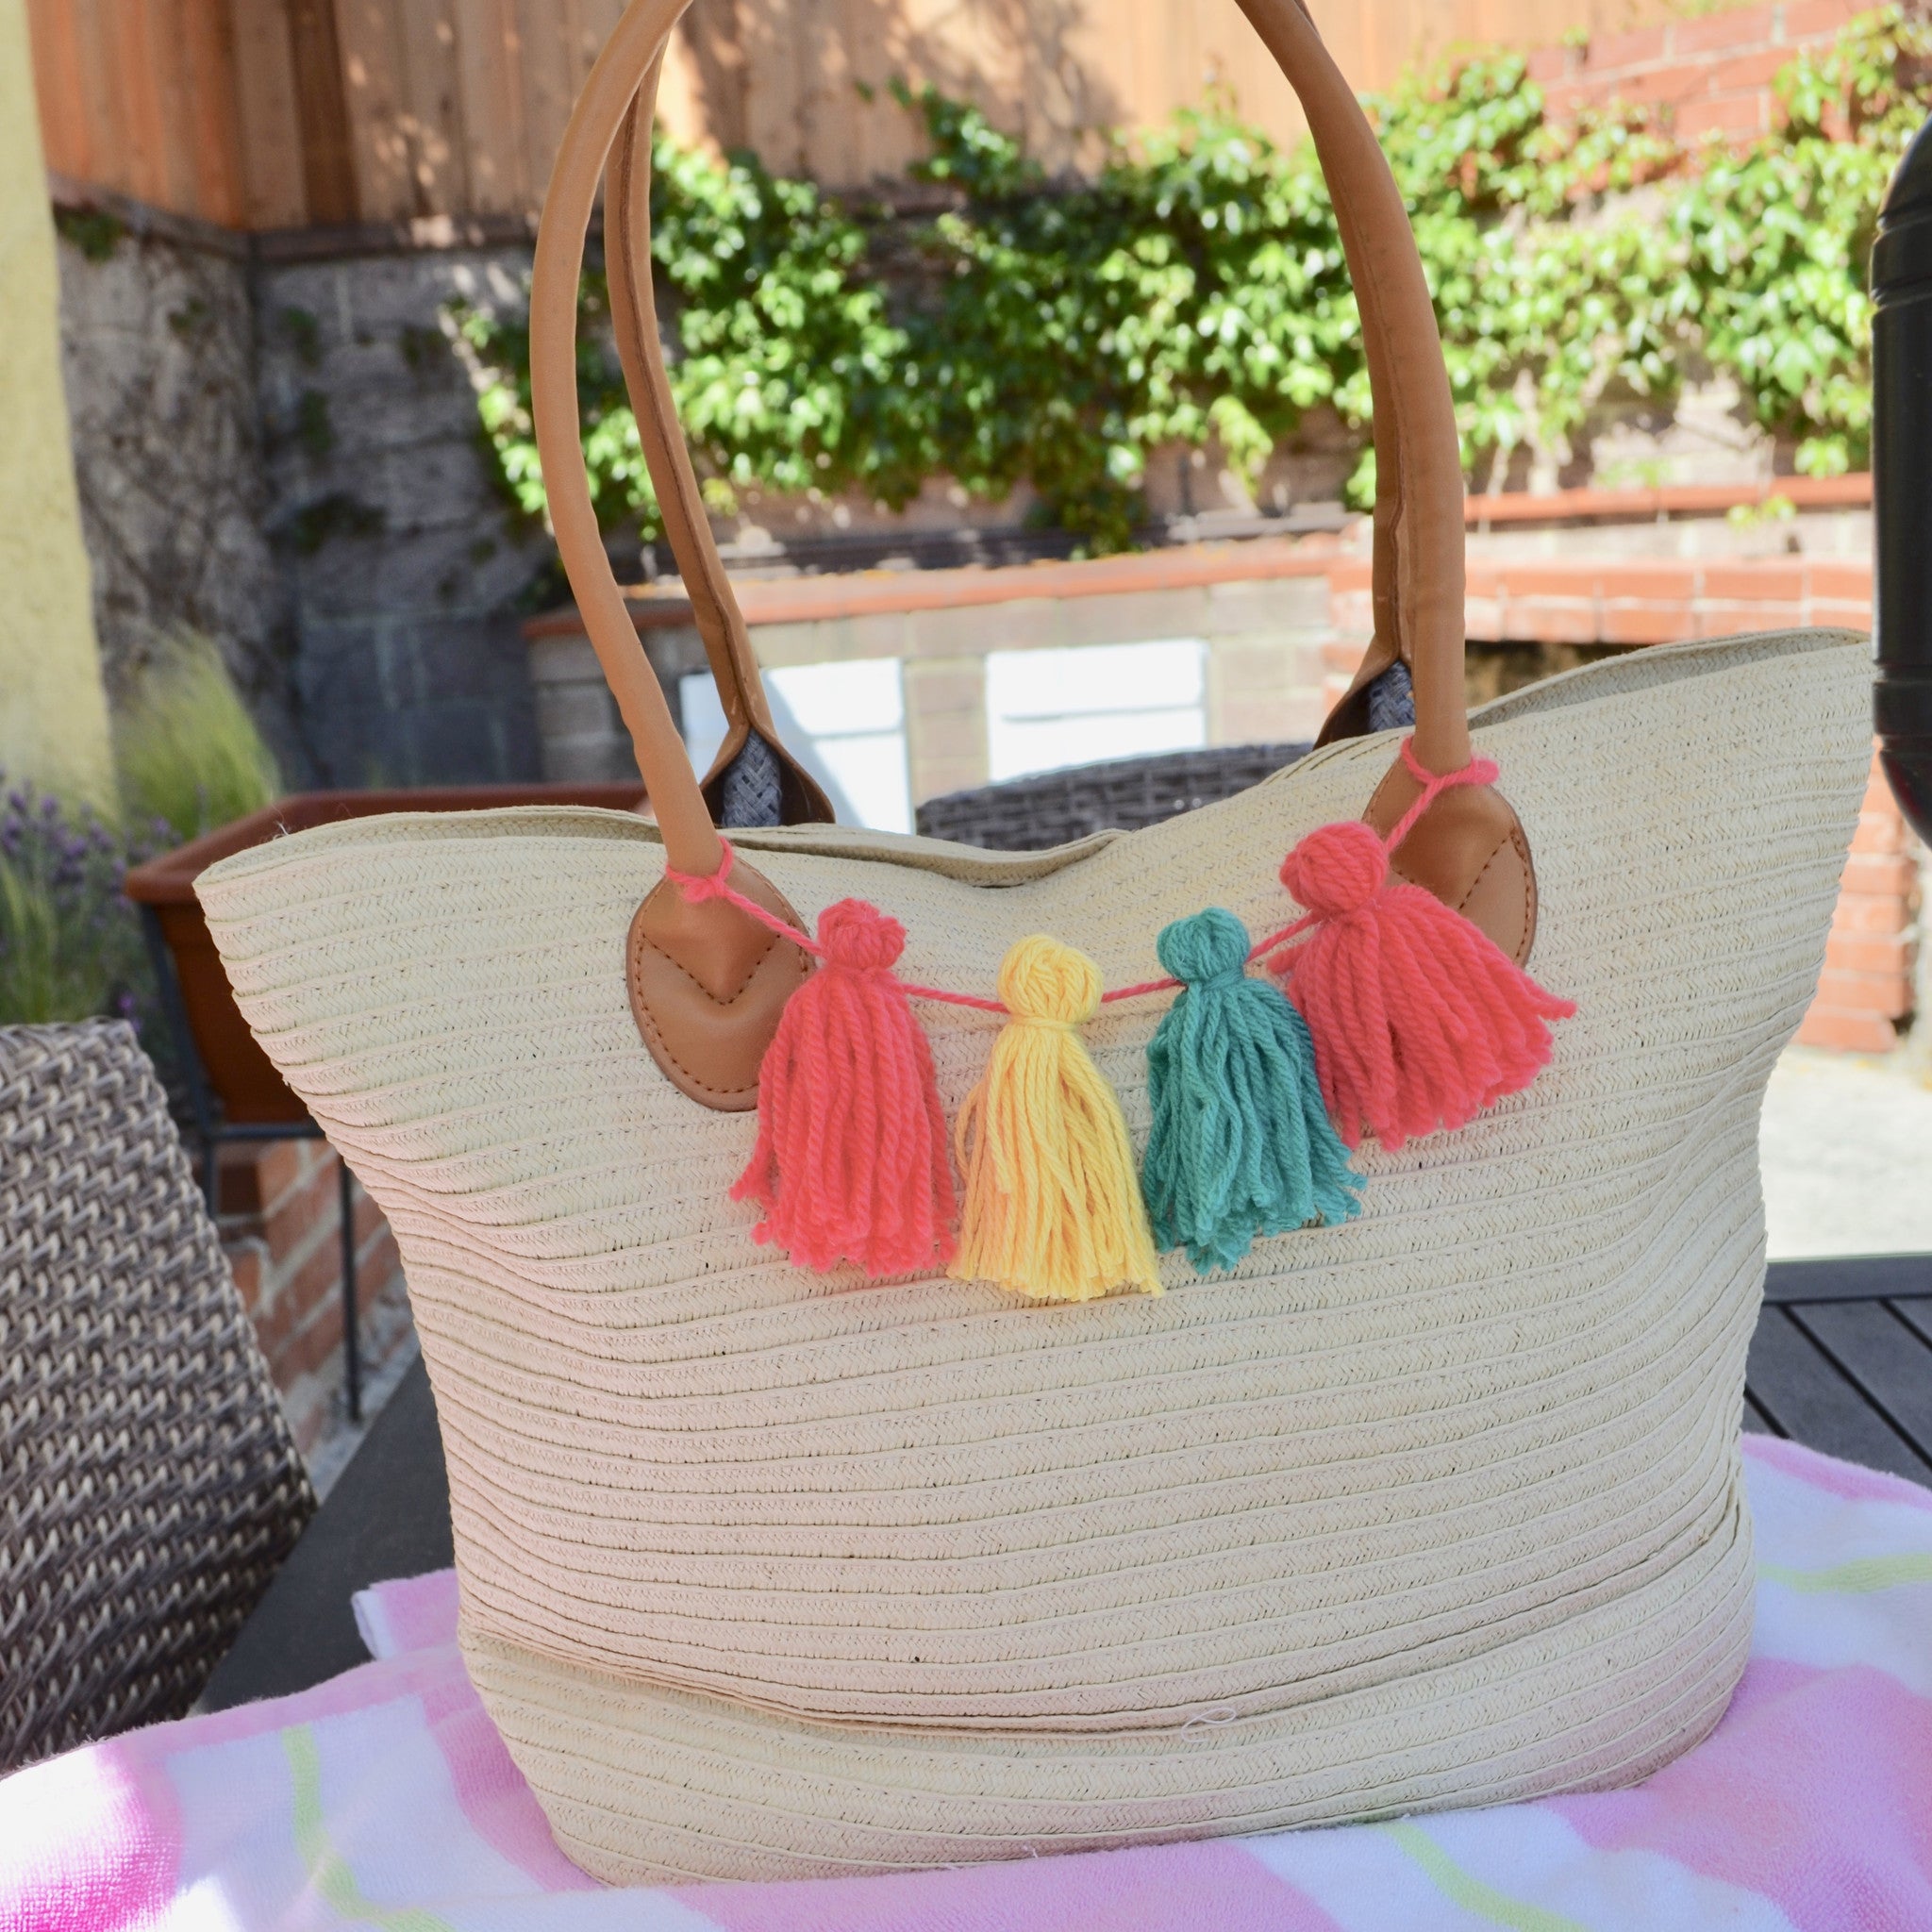 SOLD) Straw beach bag. Small wicker handbag, woven straw purse. For sale  10% OFF coupon. | Bags, Handmade purses, Straw beach bag